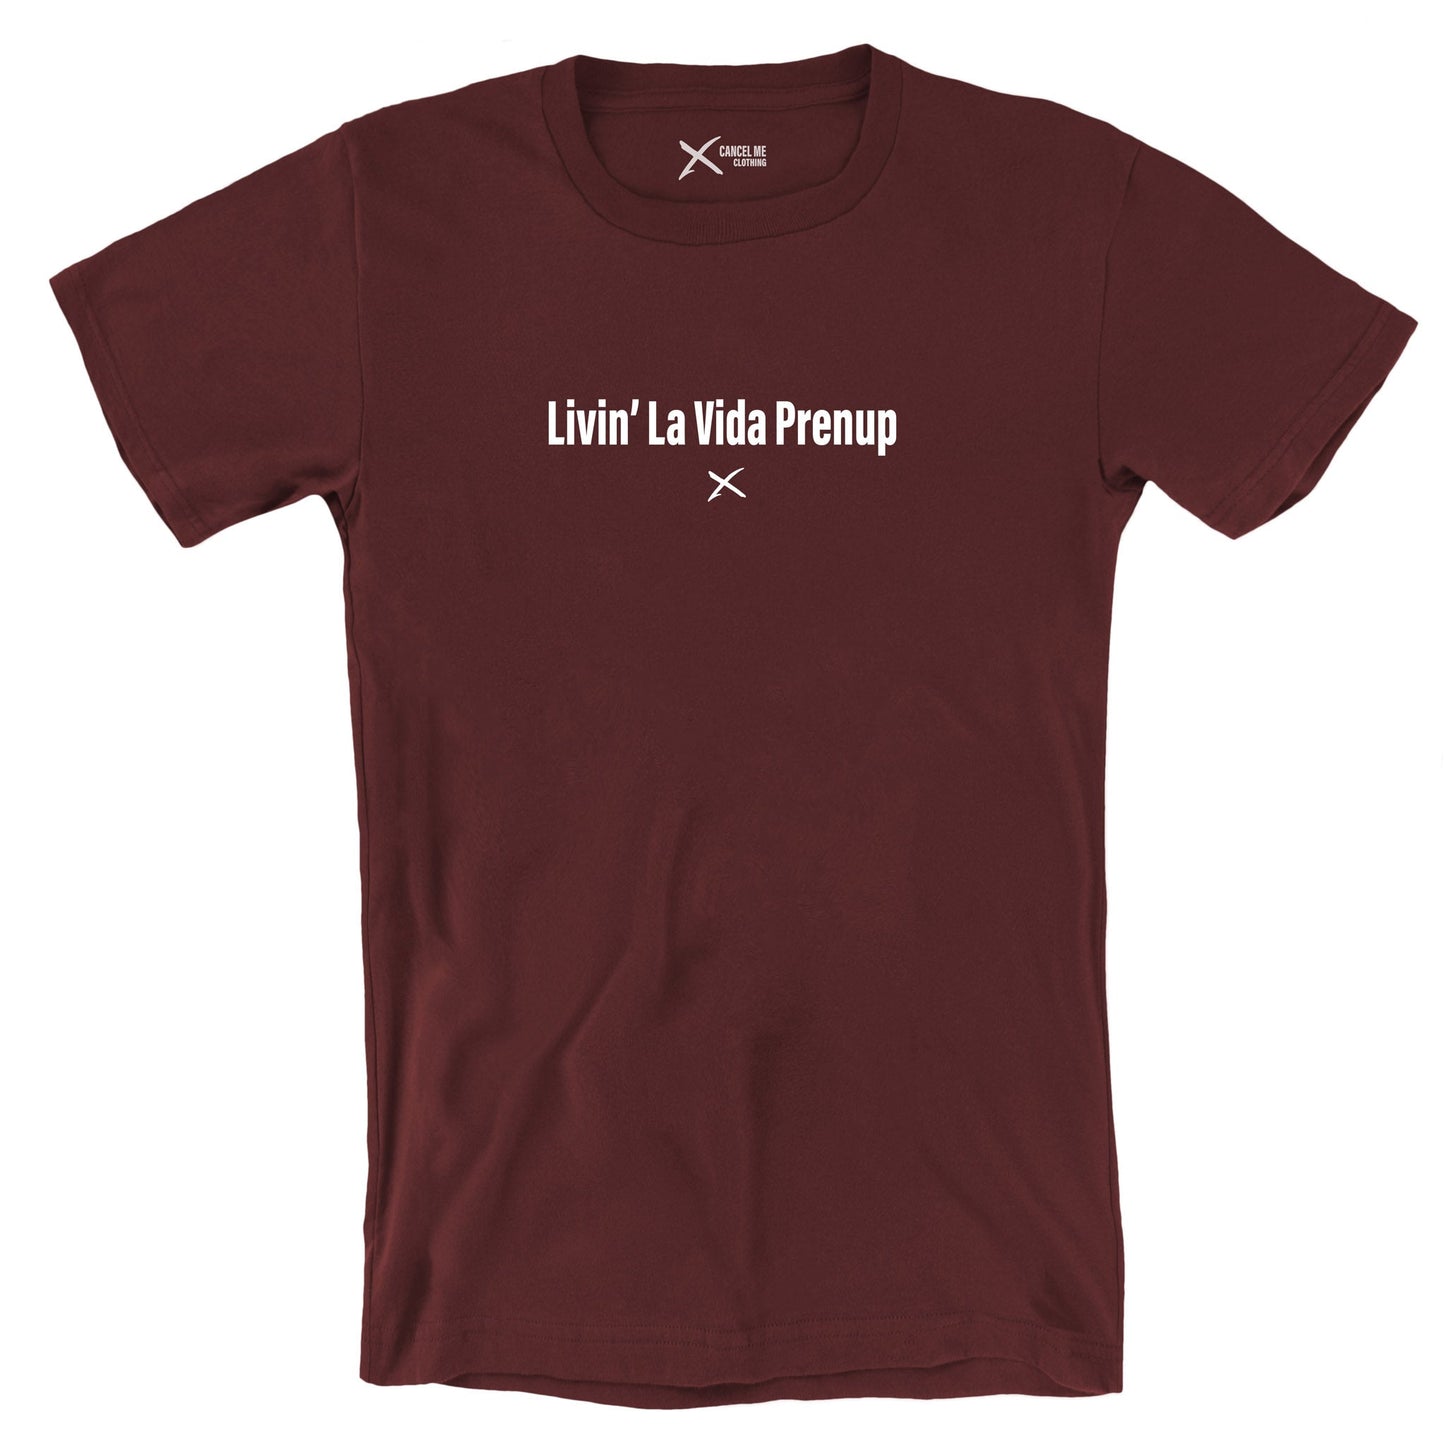 Livin' La Vida Prenup - Shirt